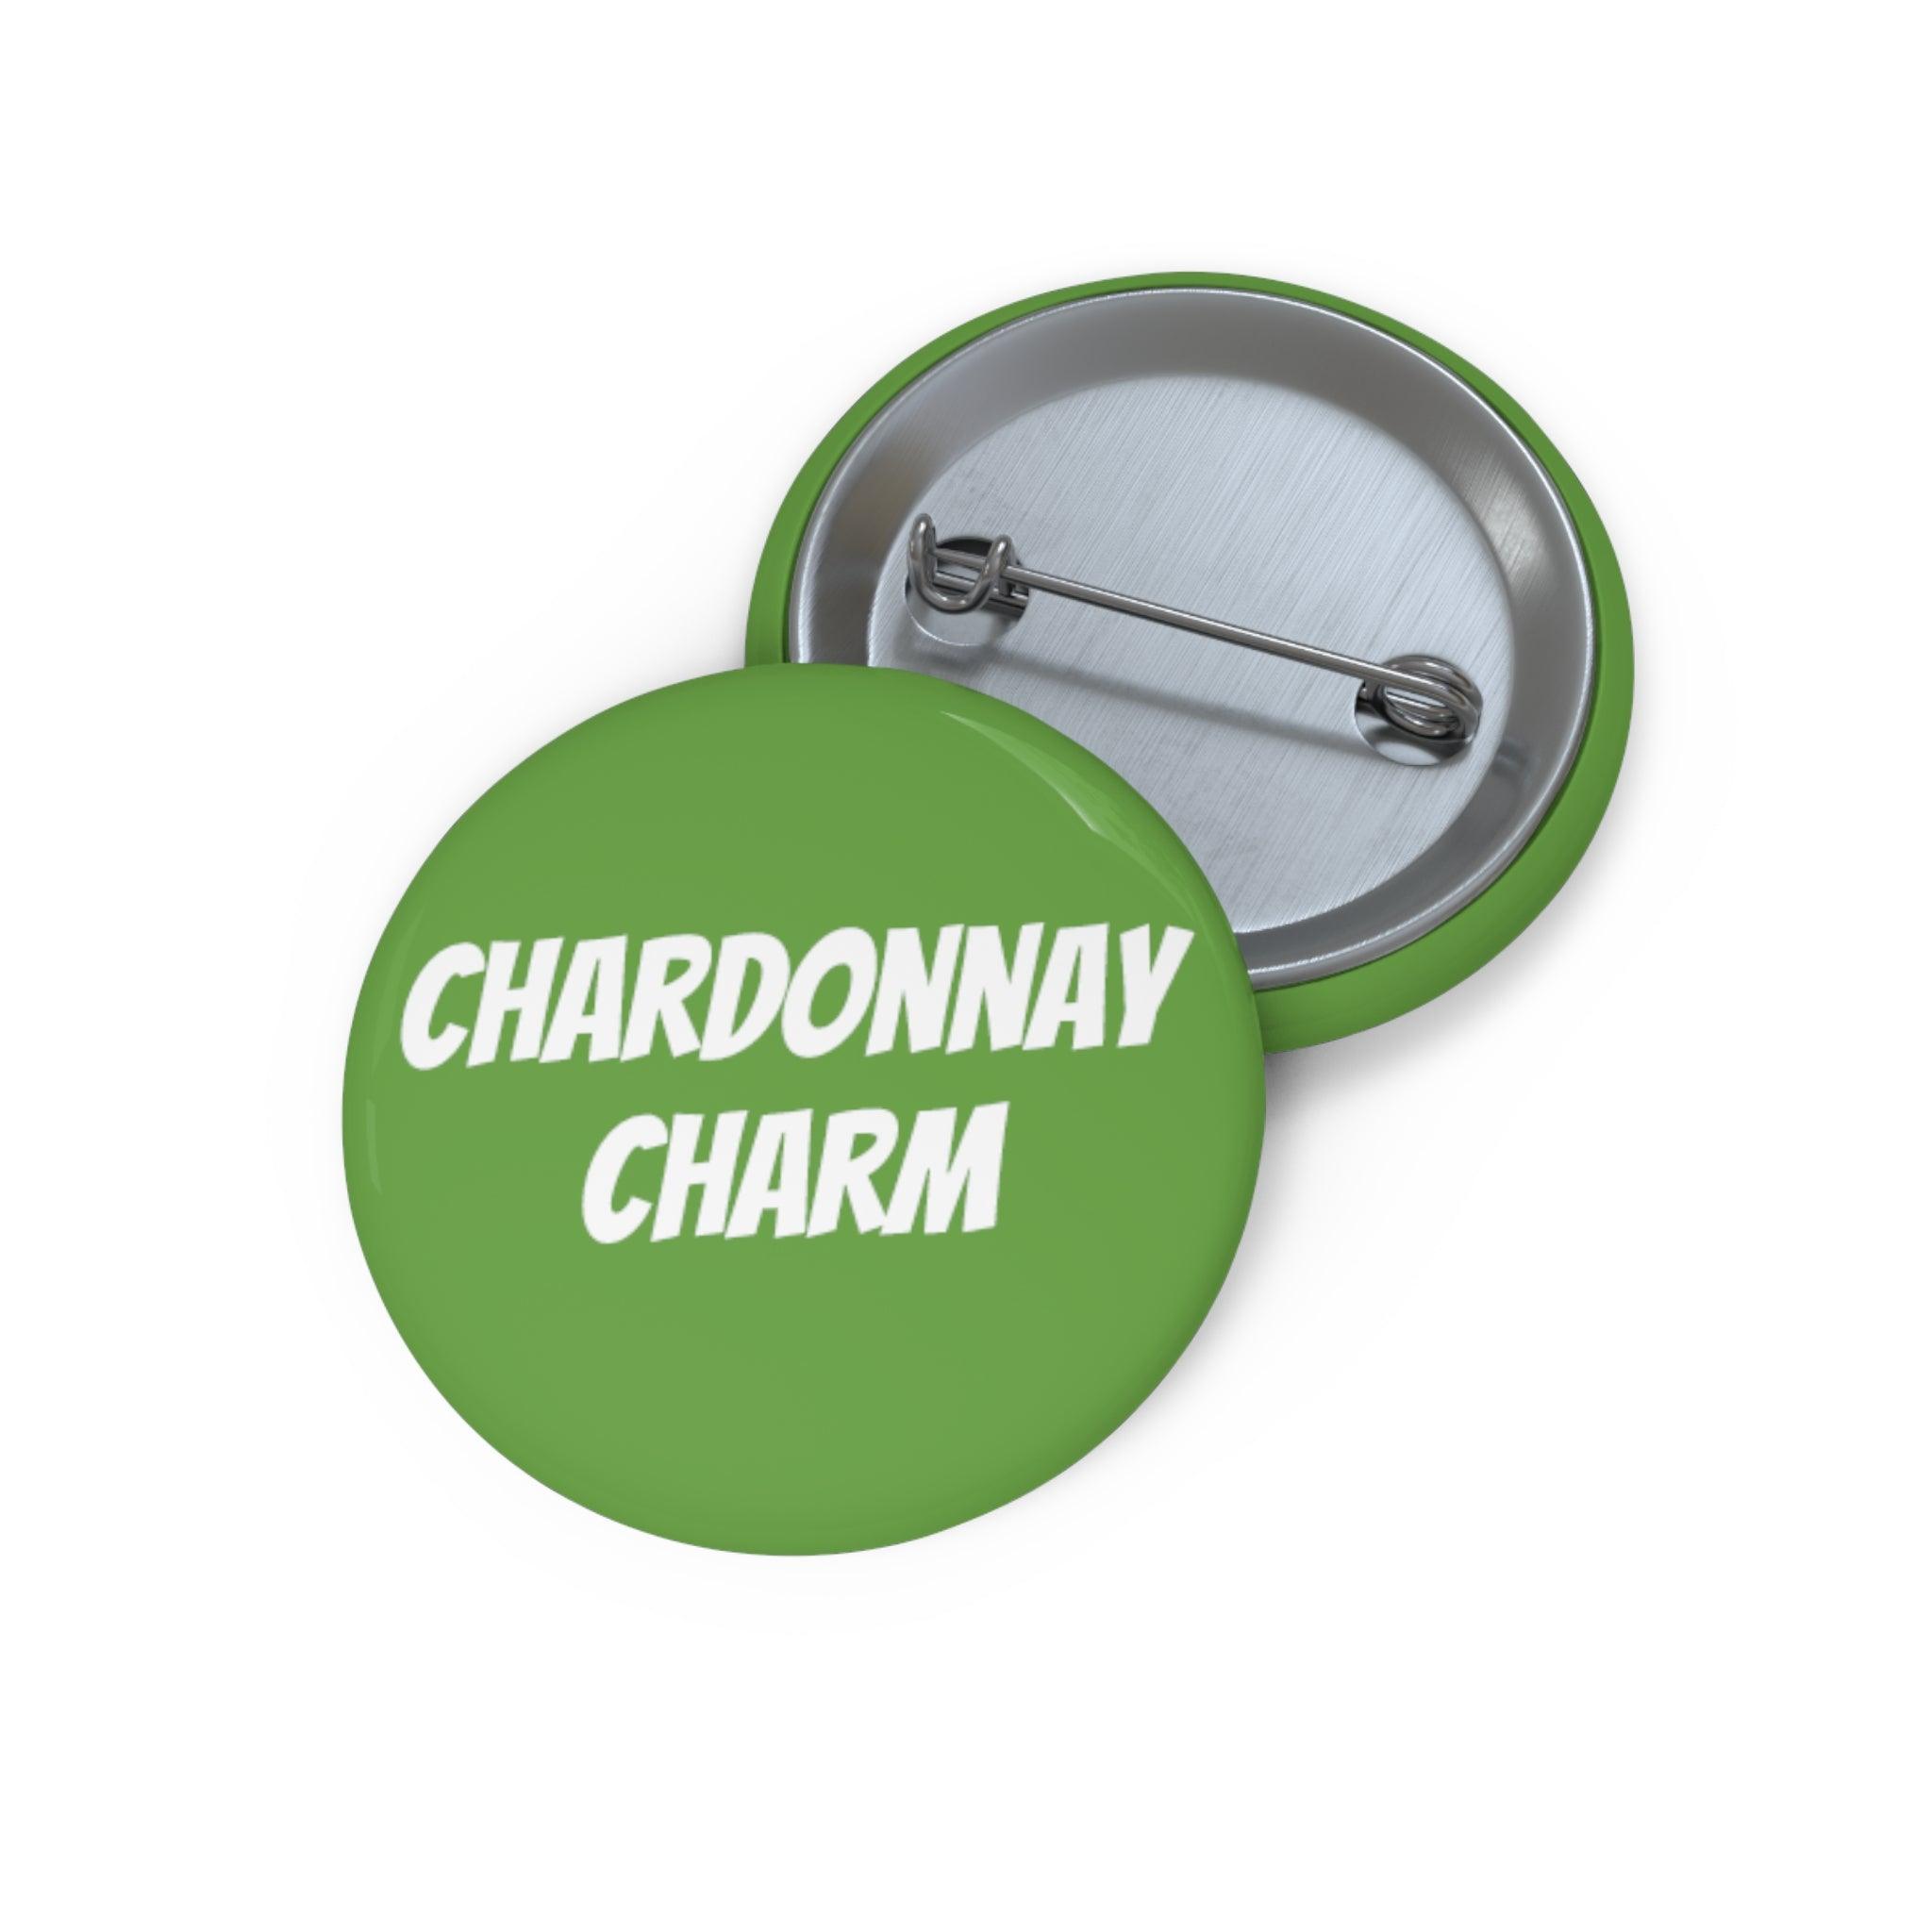 Chardonnay Charm Pin Buttons